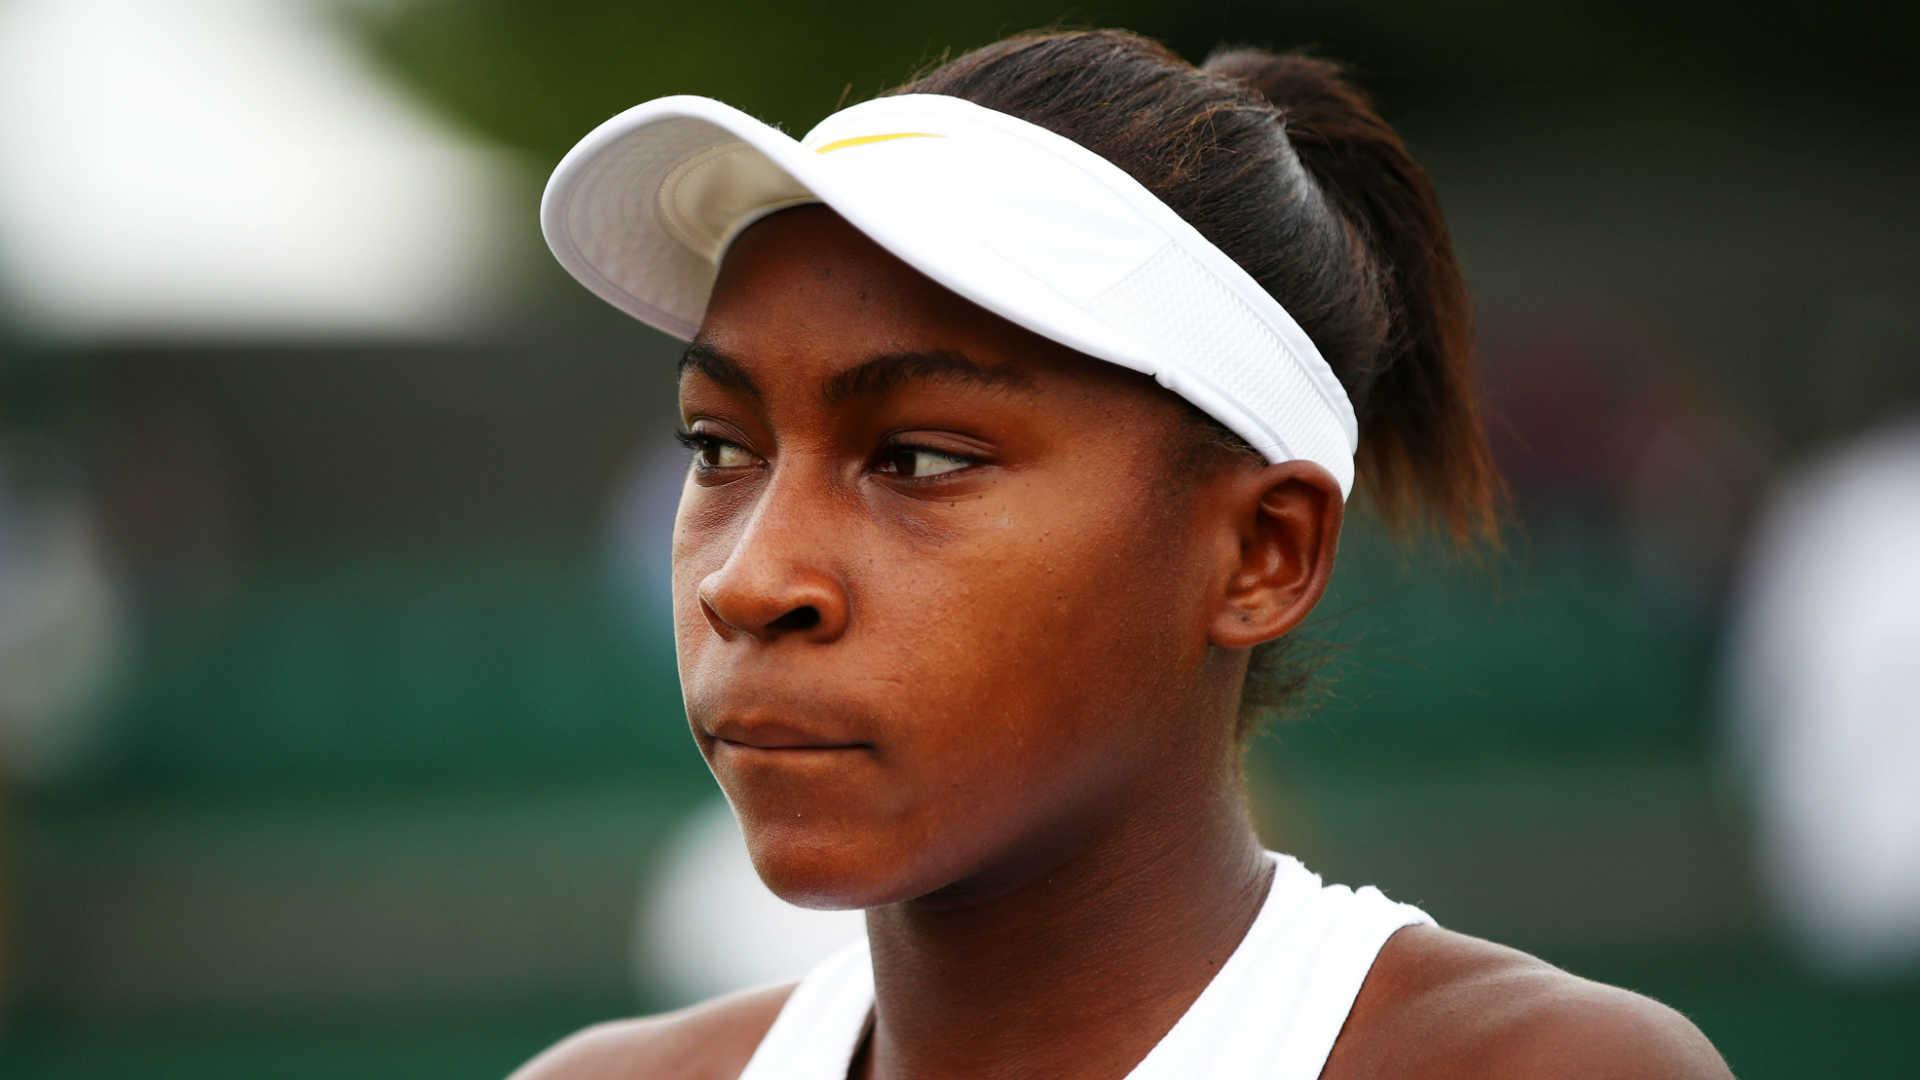 U.S. Open Wants 15 Year Old Coco Gauff In Main Draw Despite Age